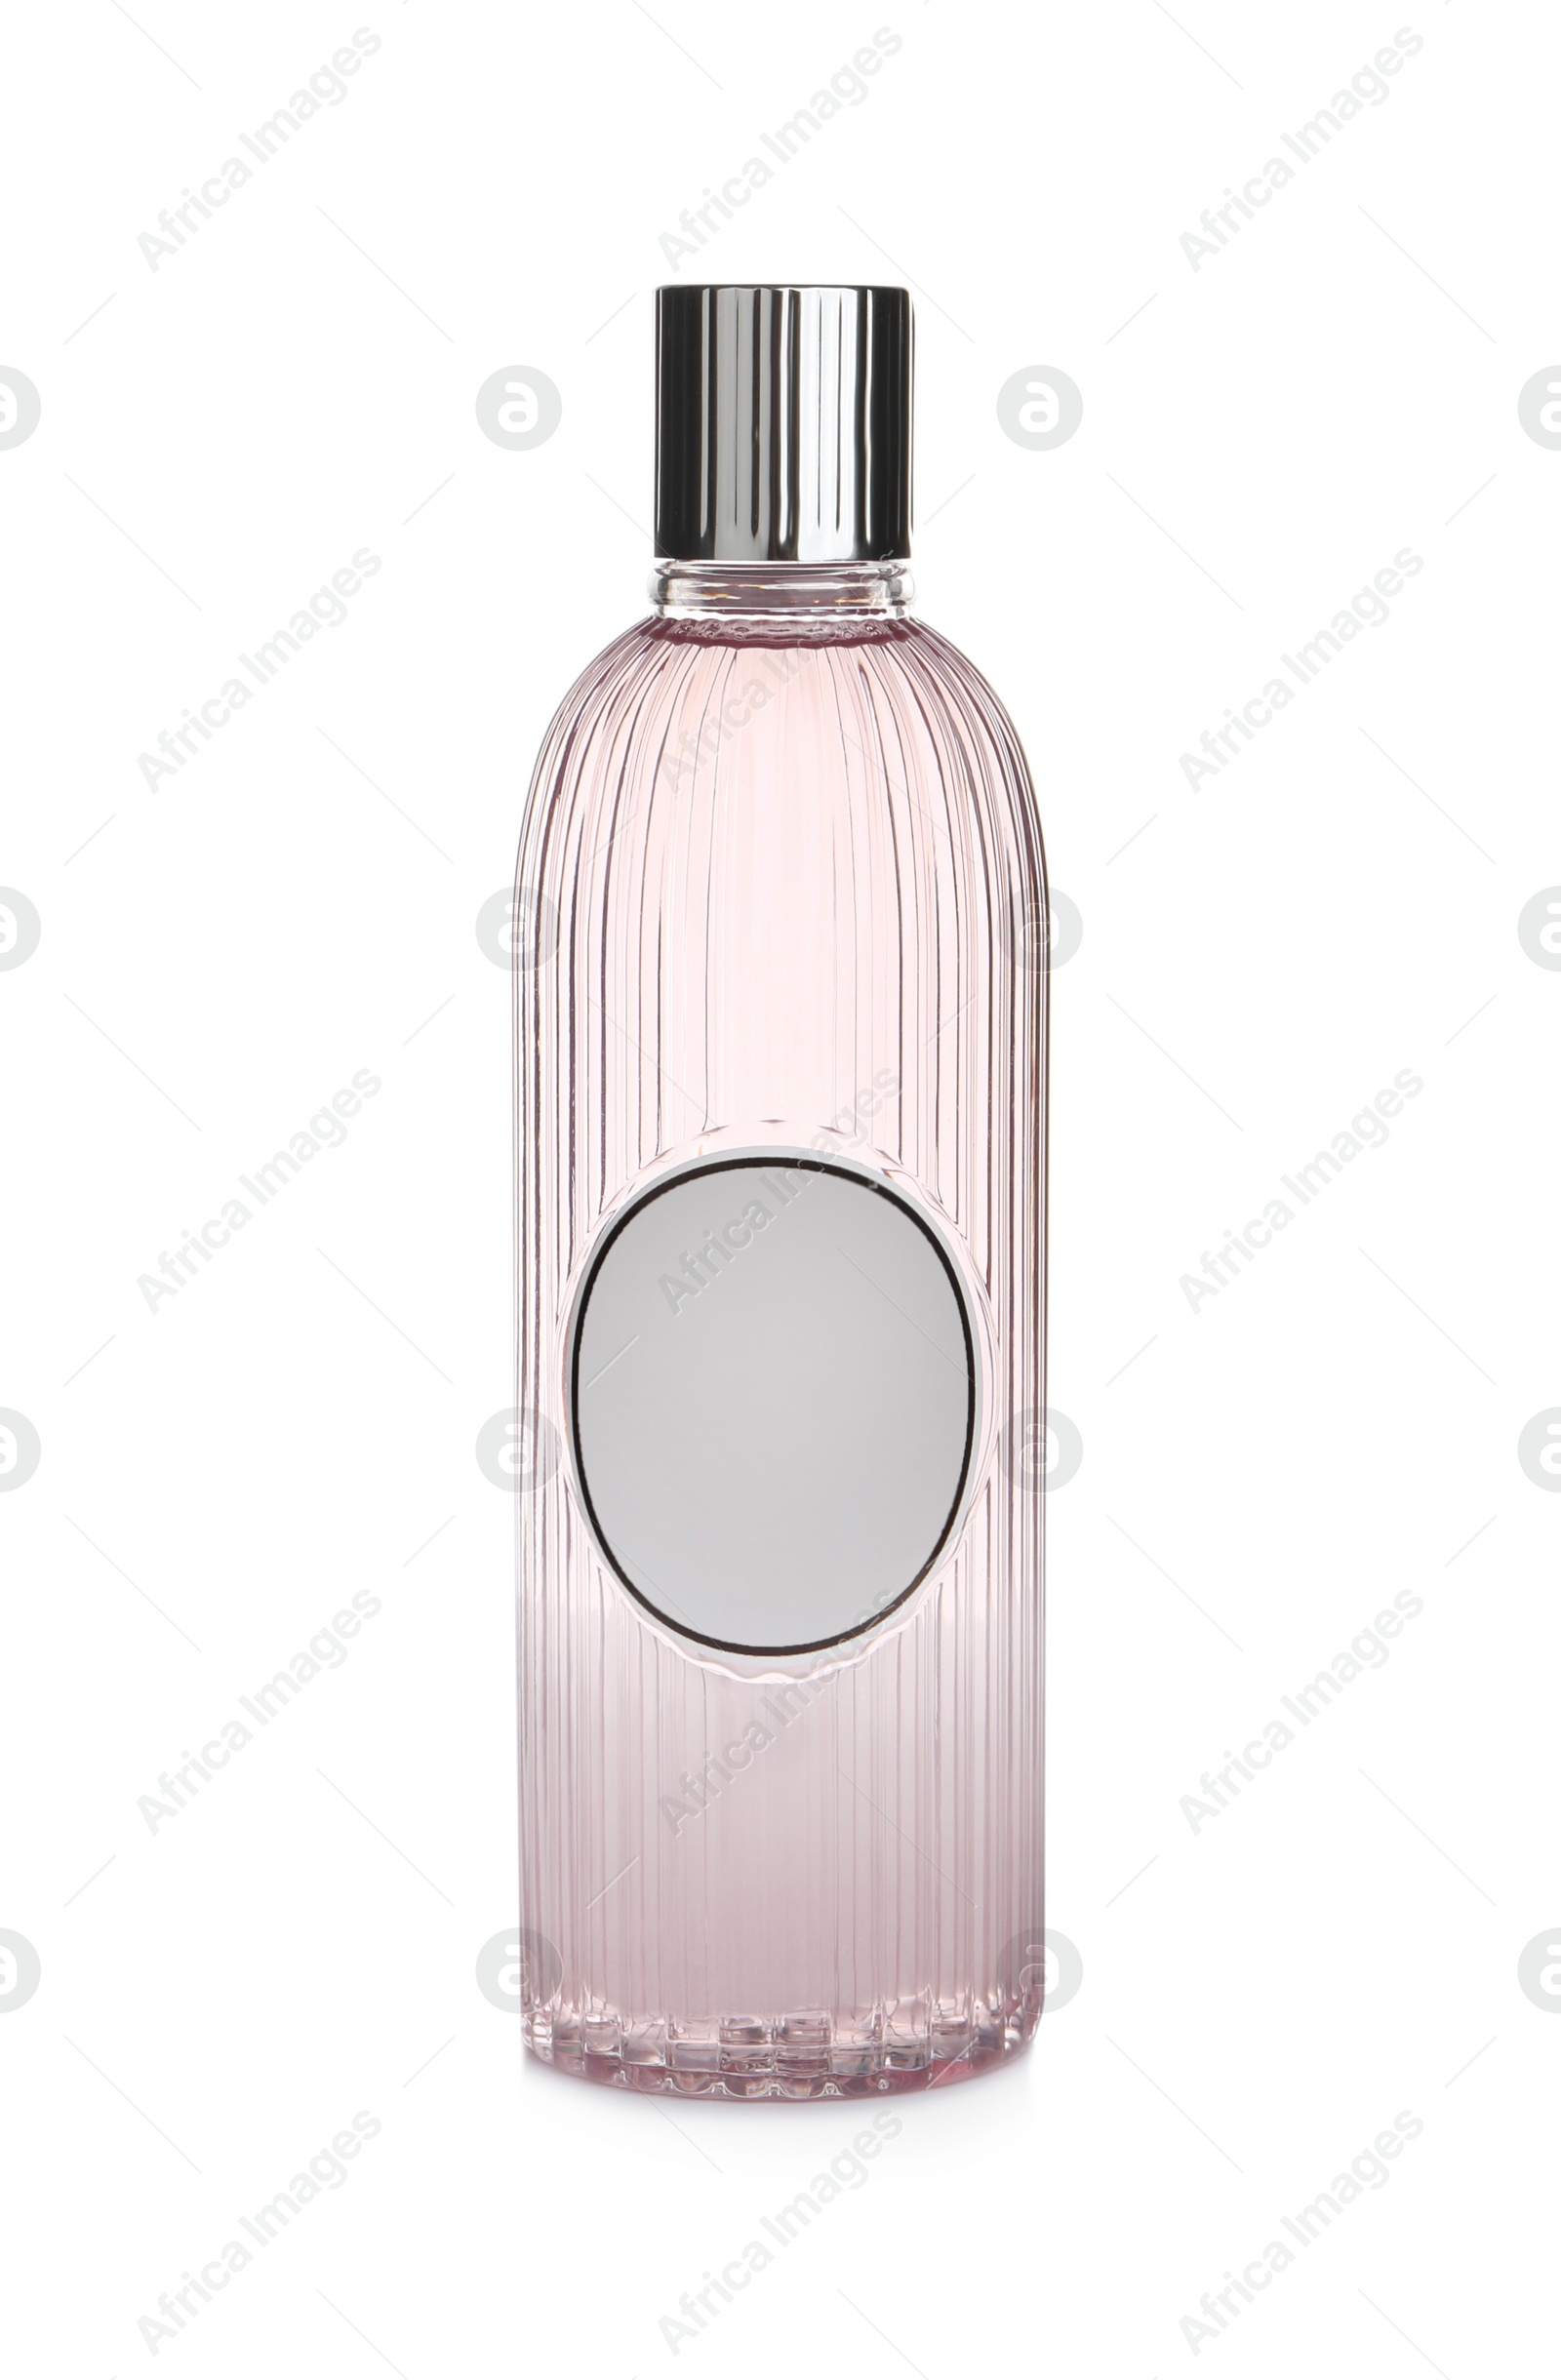 Photo of Stylish bottle with cosmetic product on white background